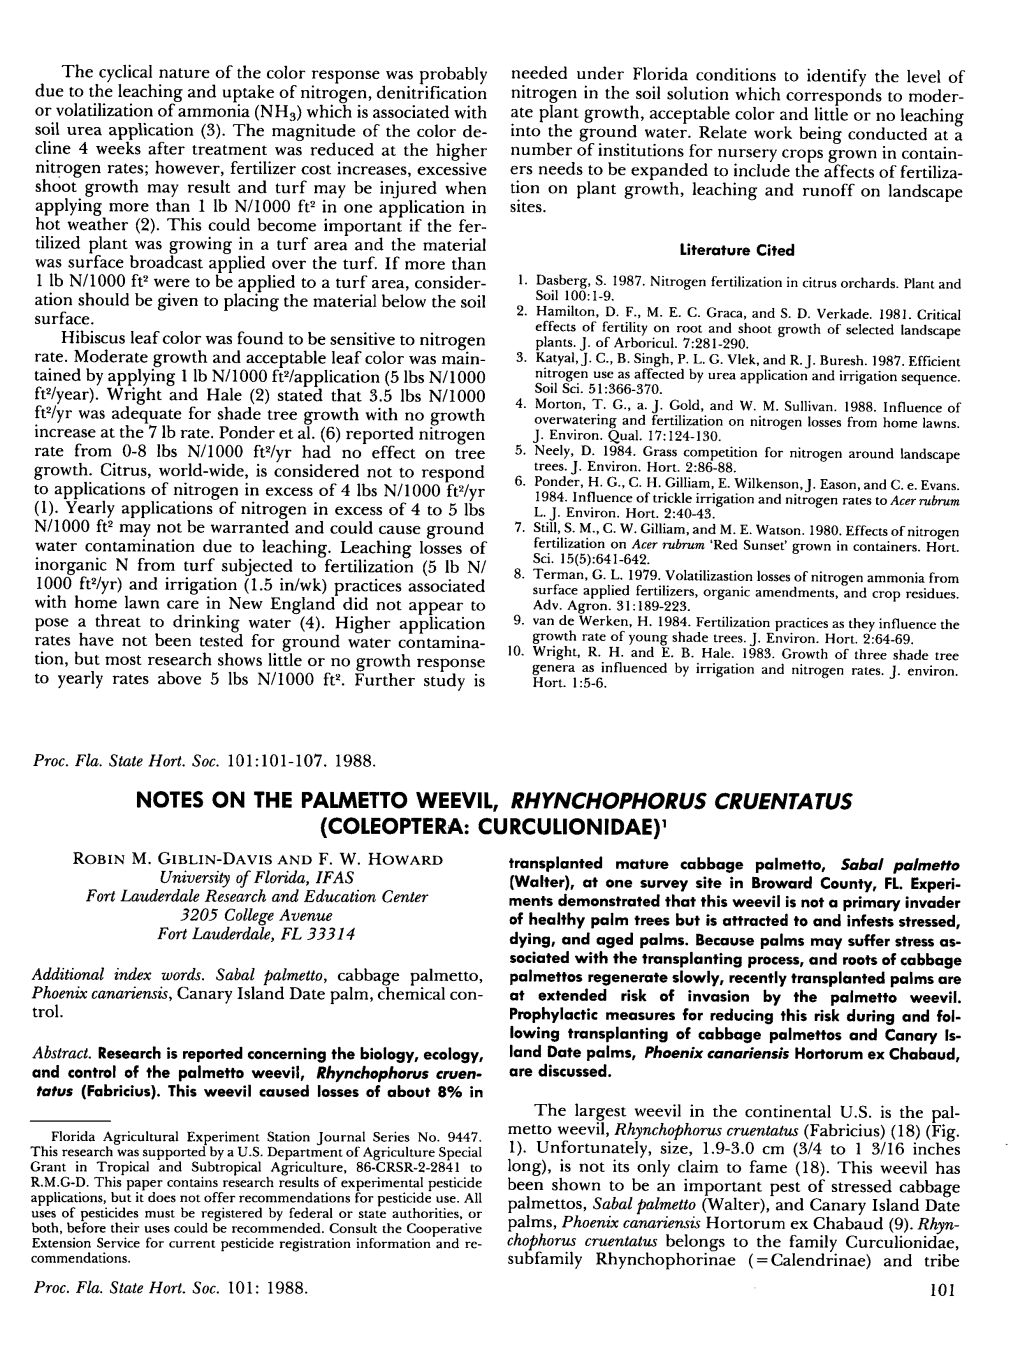 Notes on the Palmetto Weevil, Rhynchophoru5 Cruentatus (Coleoptera: Curculionidae)1